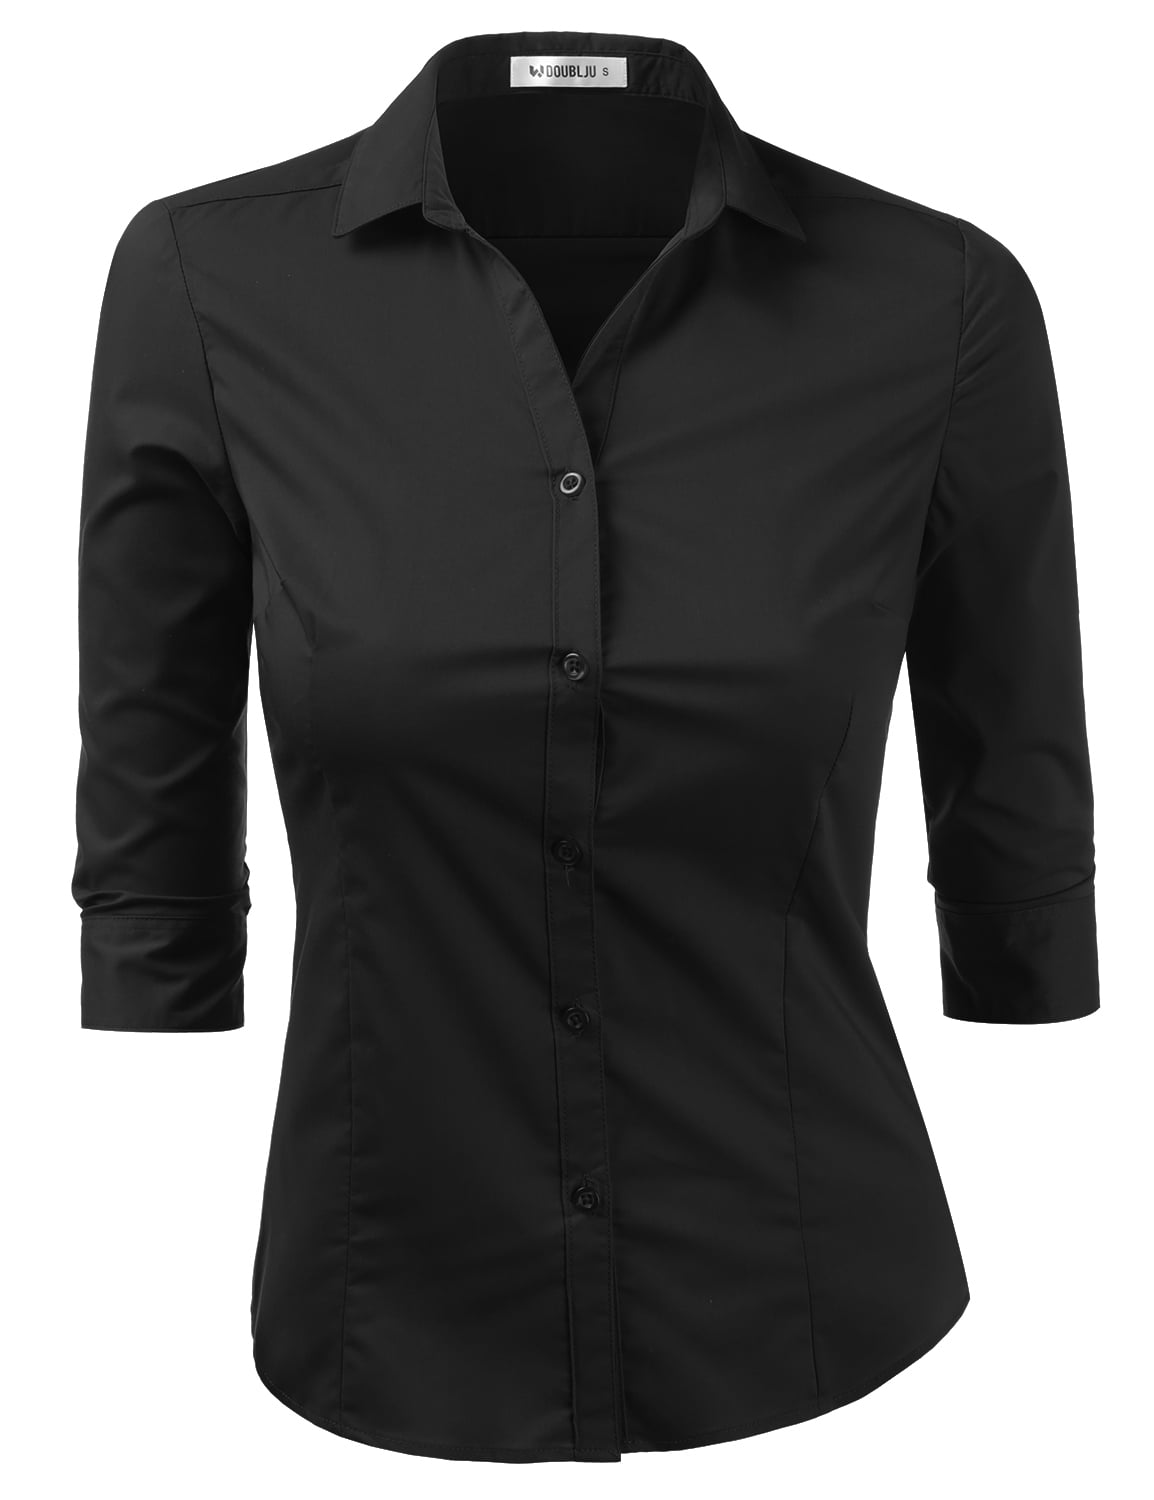 doublju-women-s-3-4-sleeve-slim-fit-button-down-dress-shirt-walmart